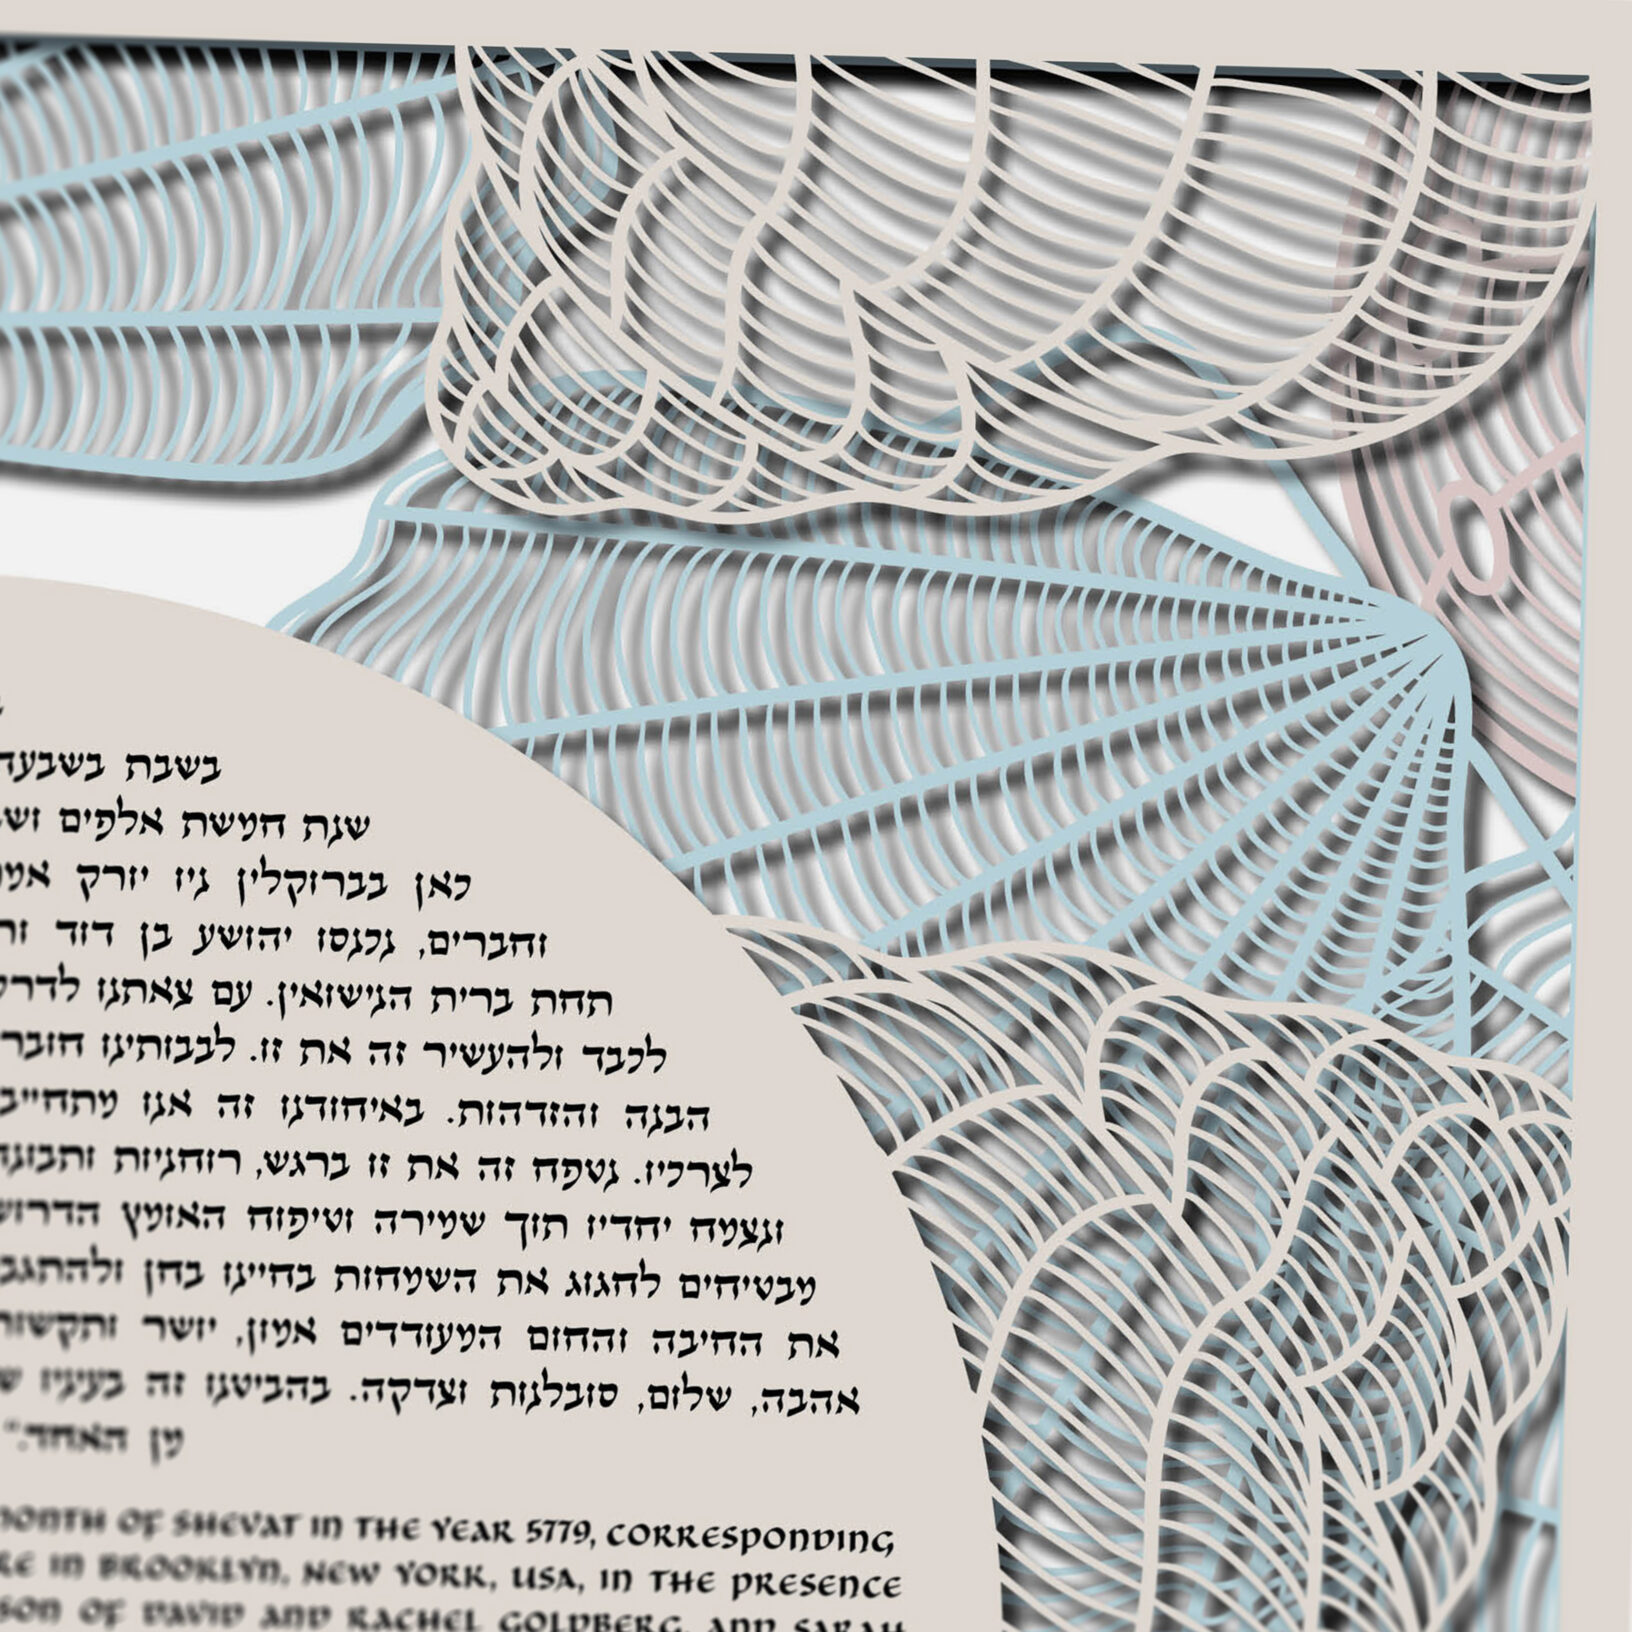 Rabbi Leah Richman Papercut Seashell Multilayer Papercut Pastel Ketubah Online